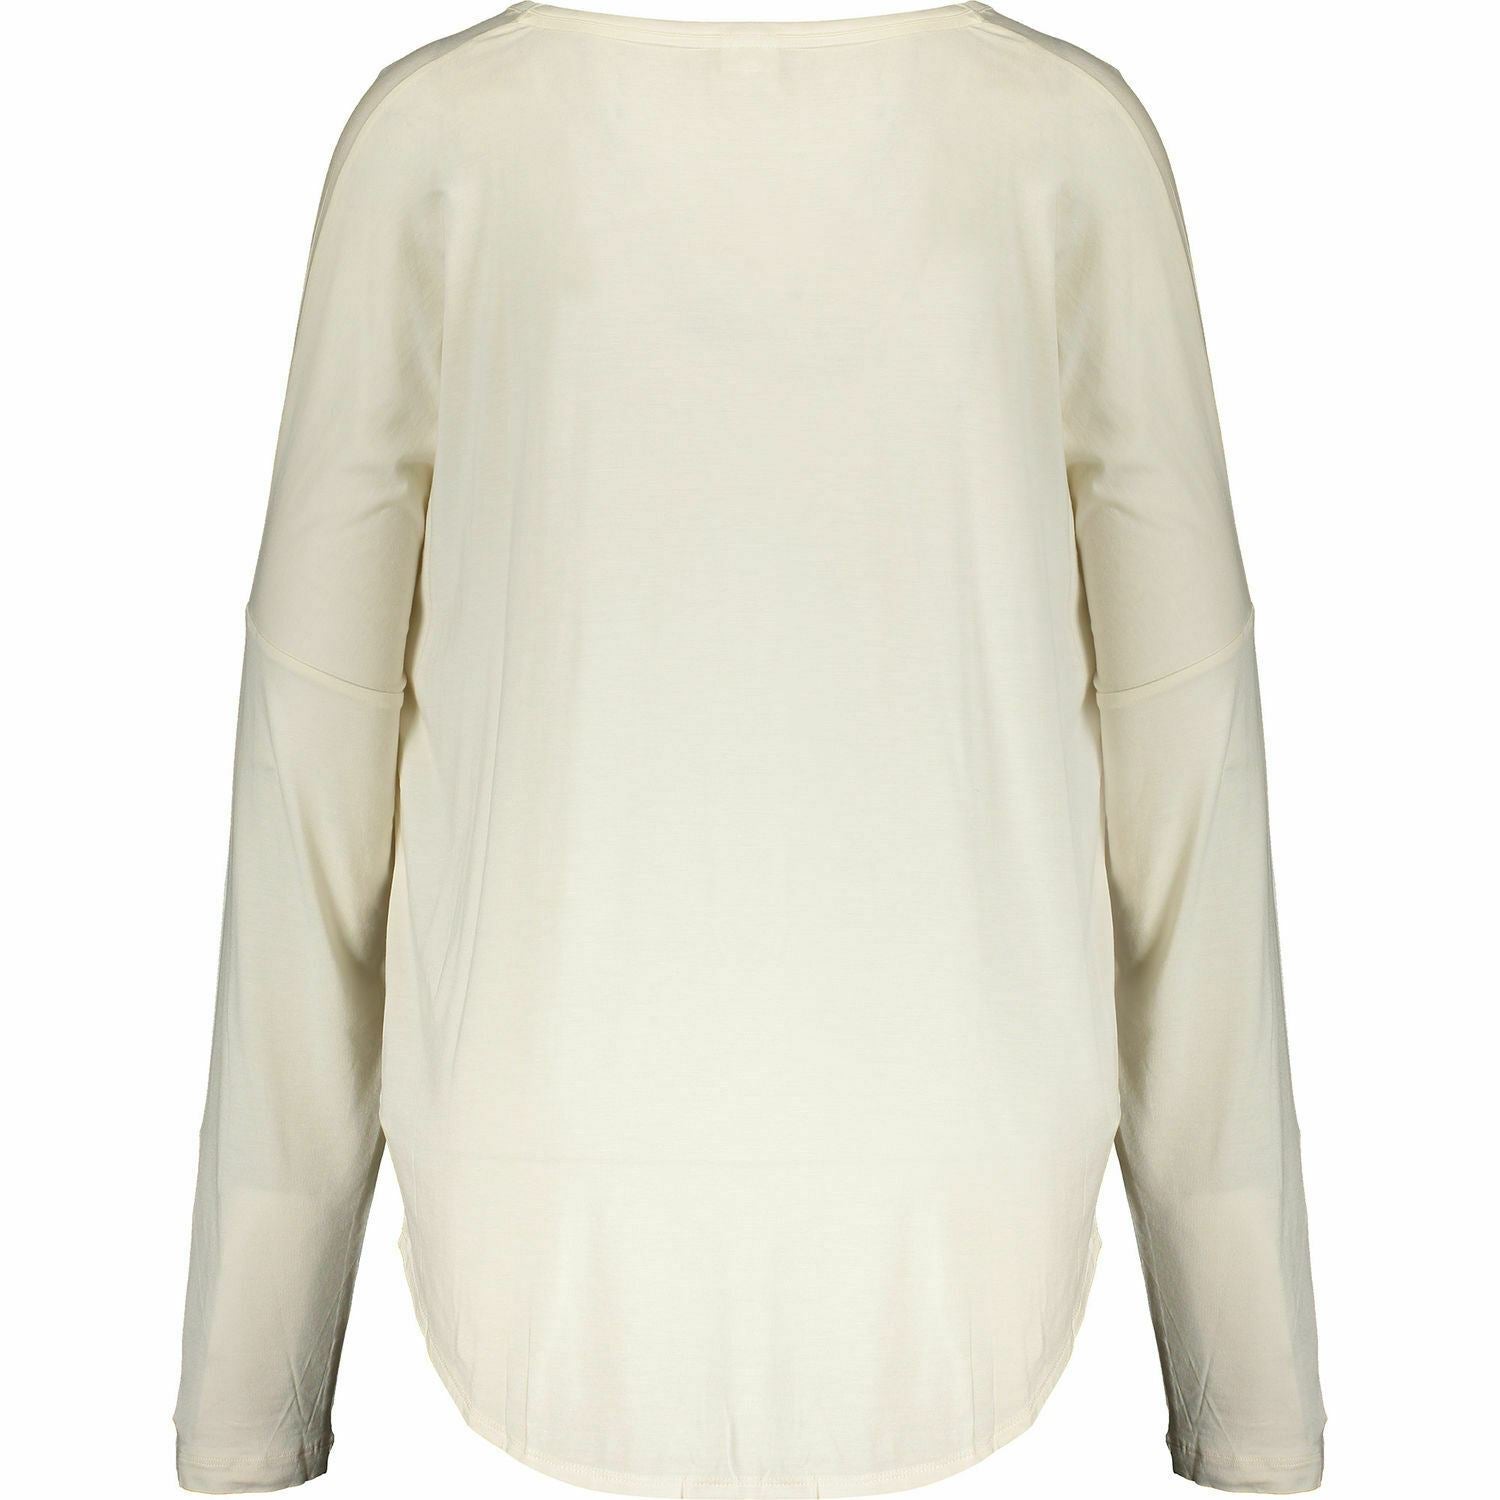 CALVIN KLEIN Sleepwear - Women's Long Sleeve Lounging/Pyjama Top, Cream, size M